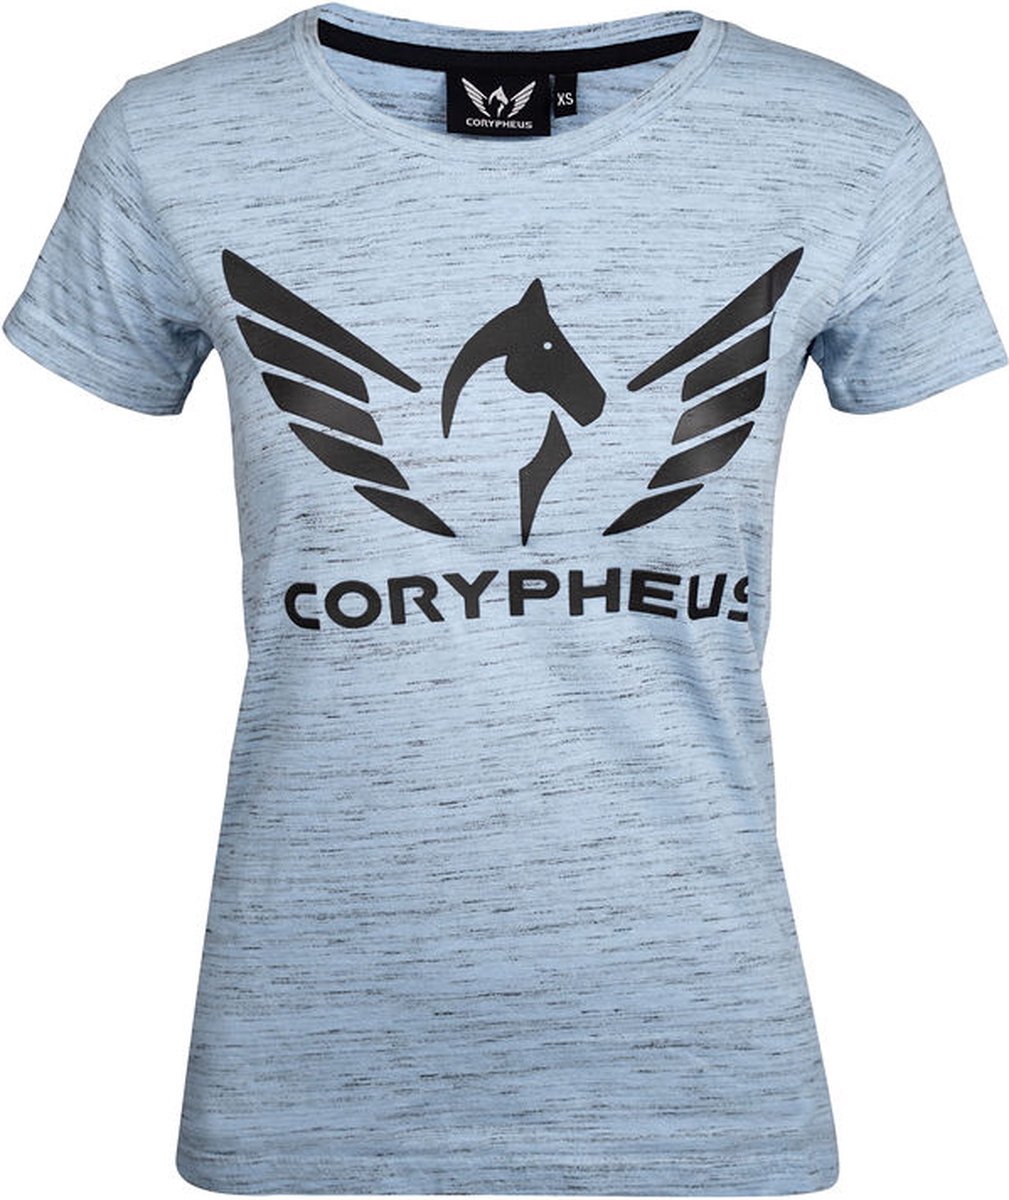 Corypheus Skyway Women's T-Shirt - XLarge